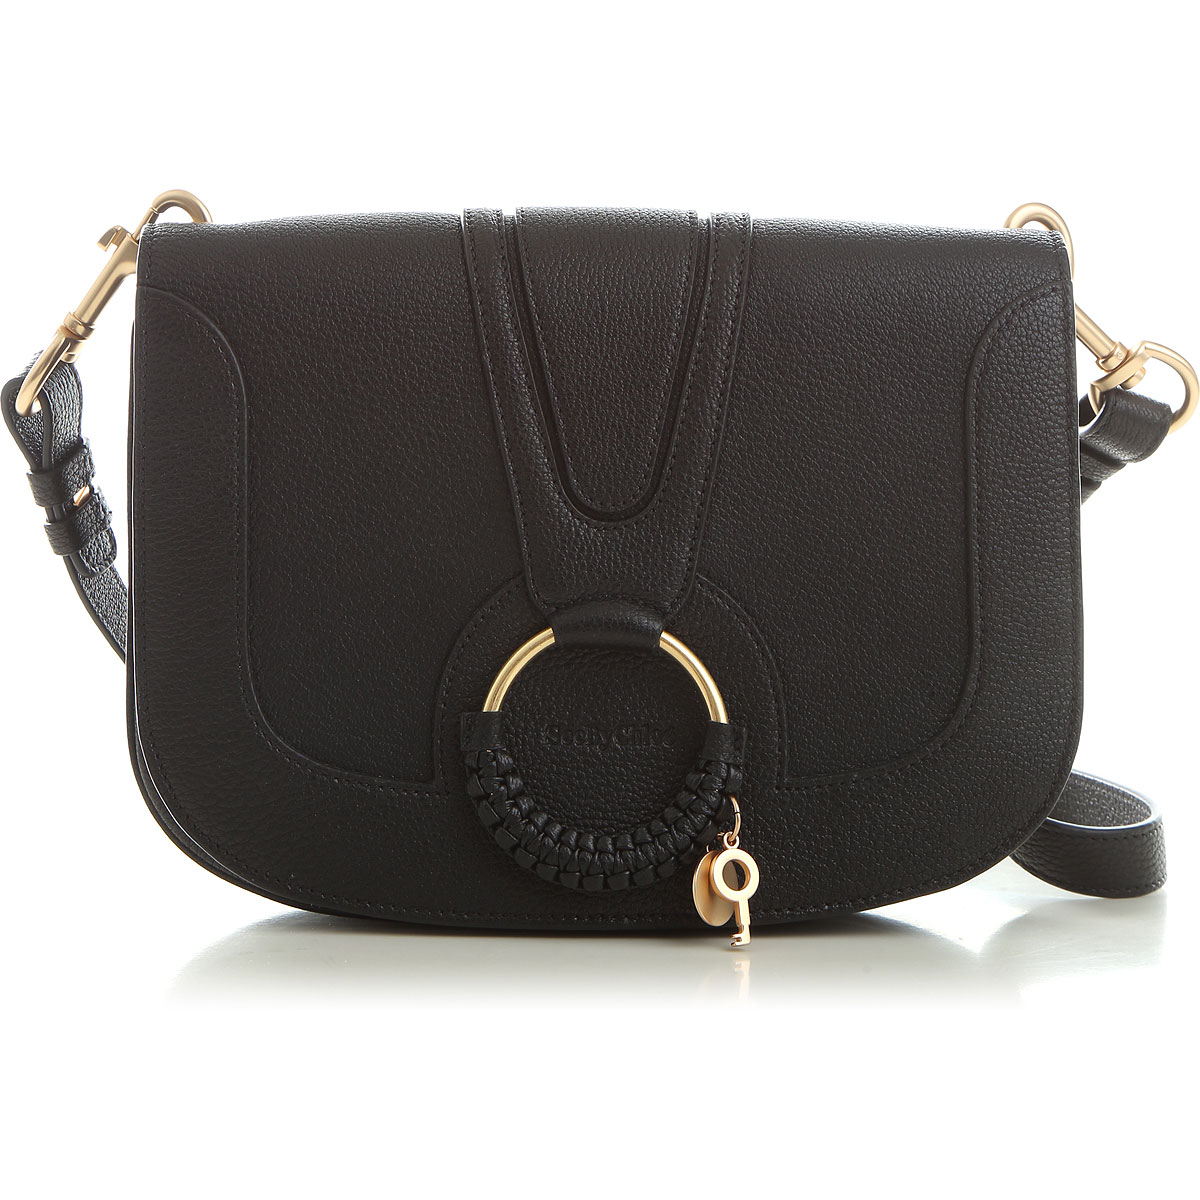 Handbags See By Chloe, Style code: chs17ss897305-001-